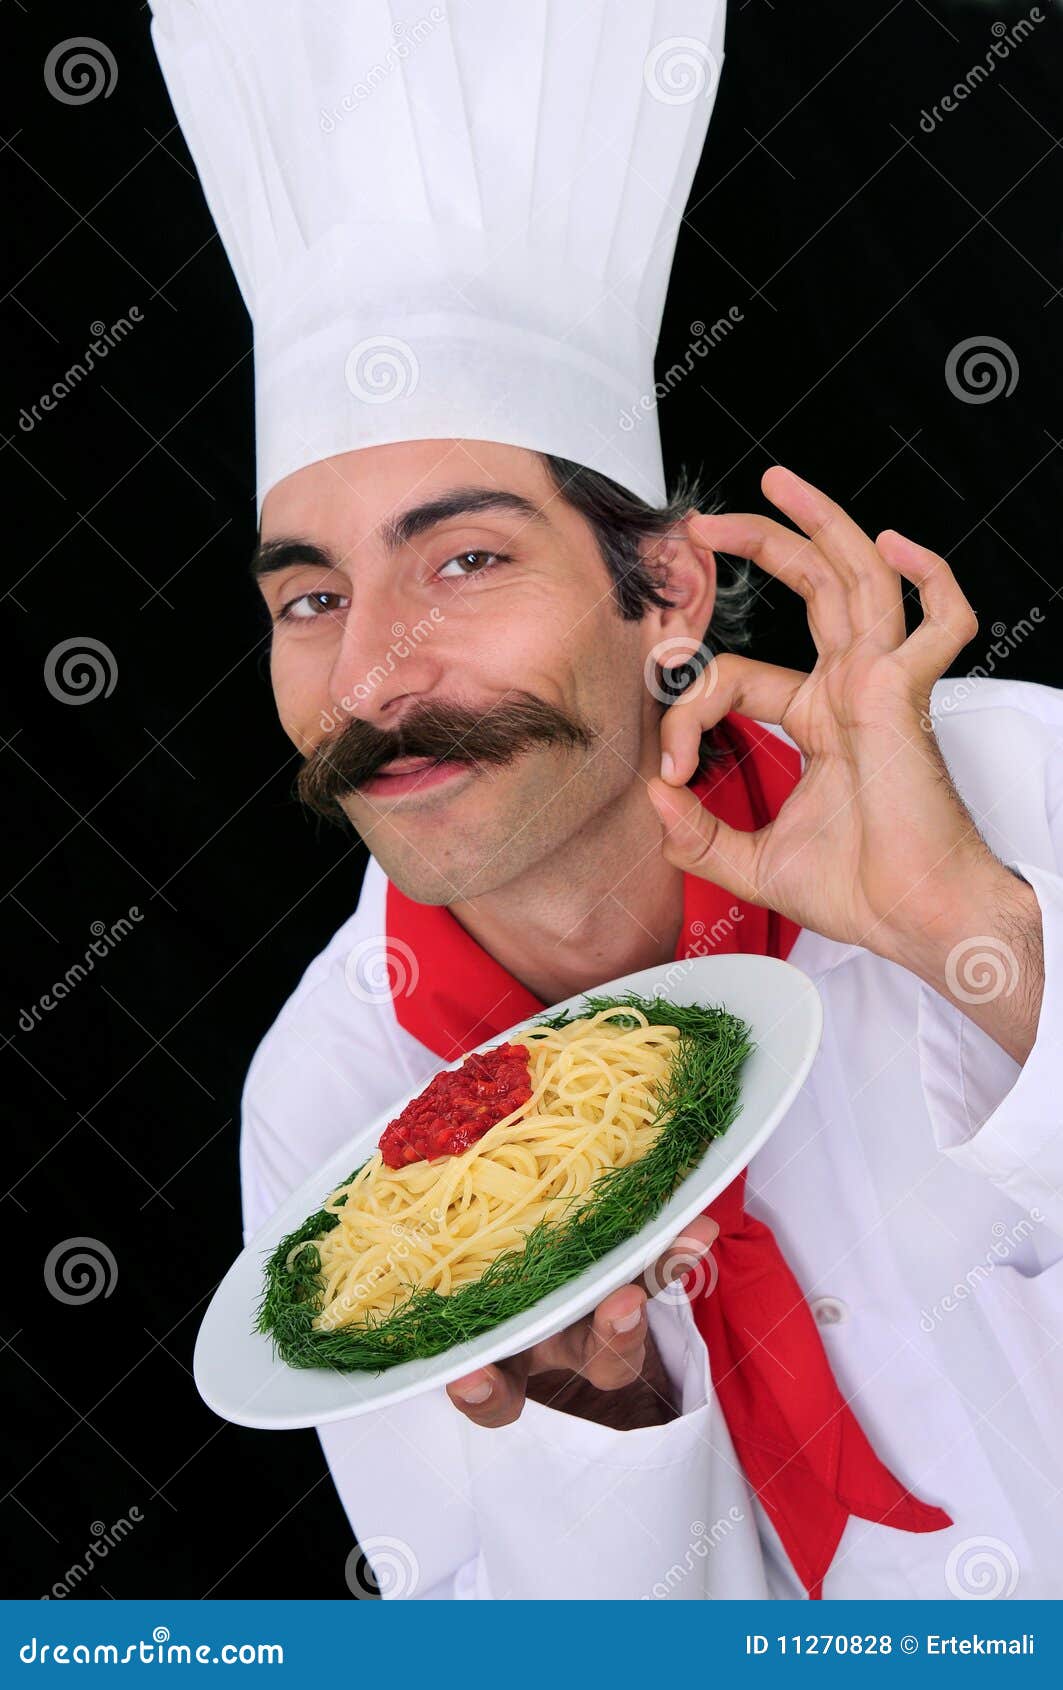 chef-showing-pasta-11270828.jpg